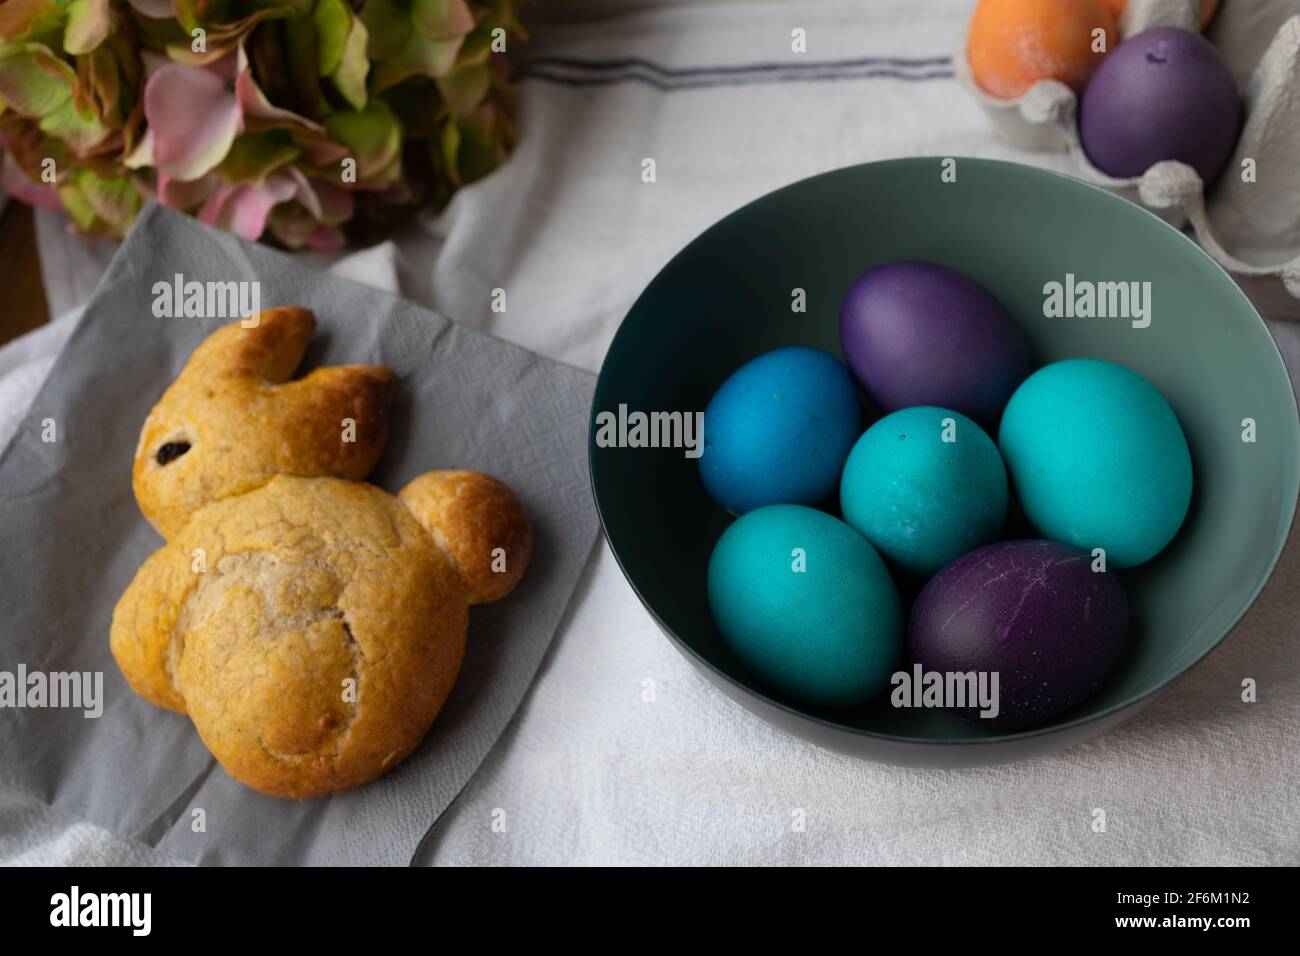 Huevos de Pascua en un tazón de fuente azul, turquesa, púrpura y naranja. Foto de stock